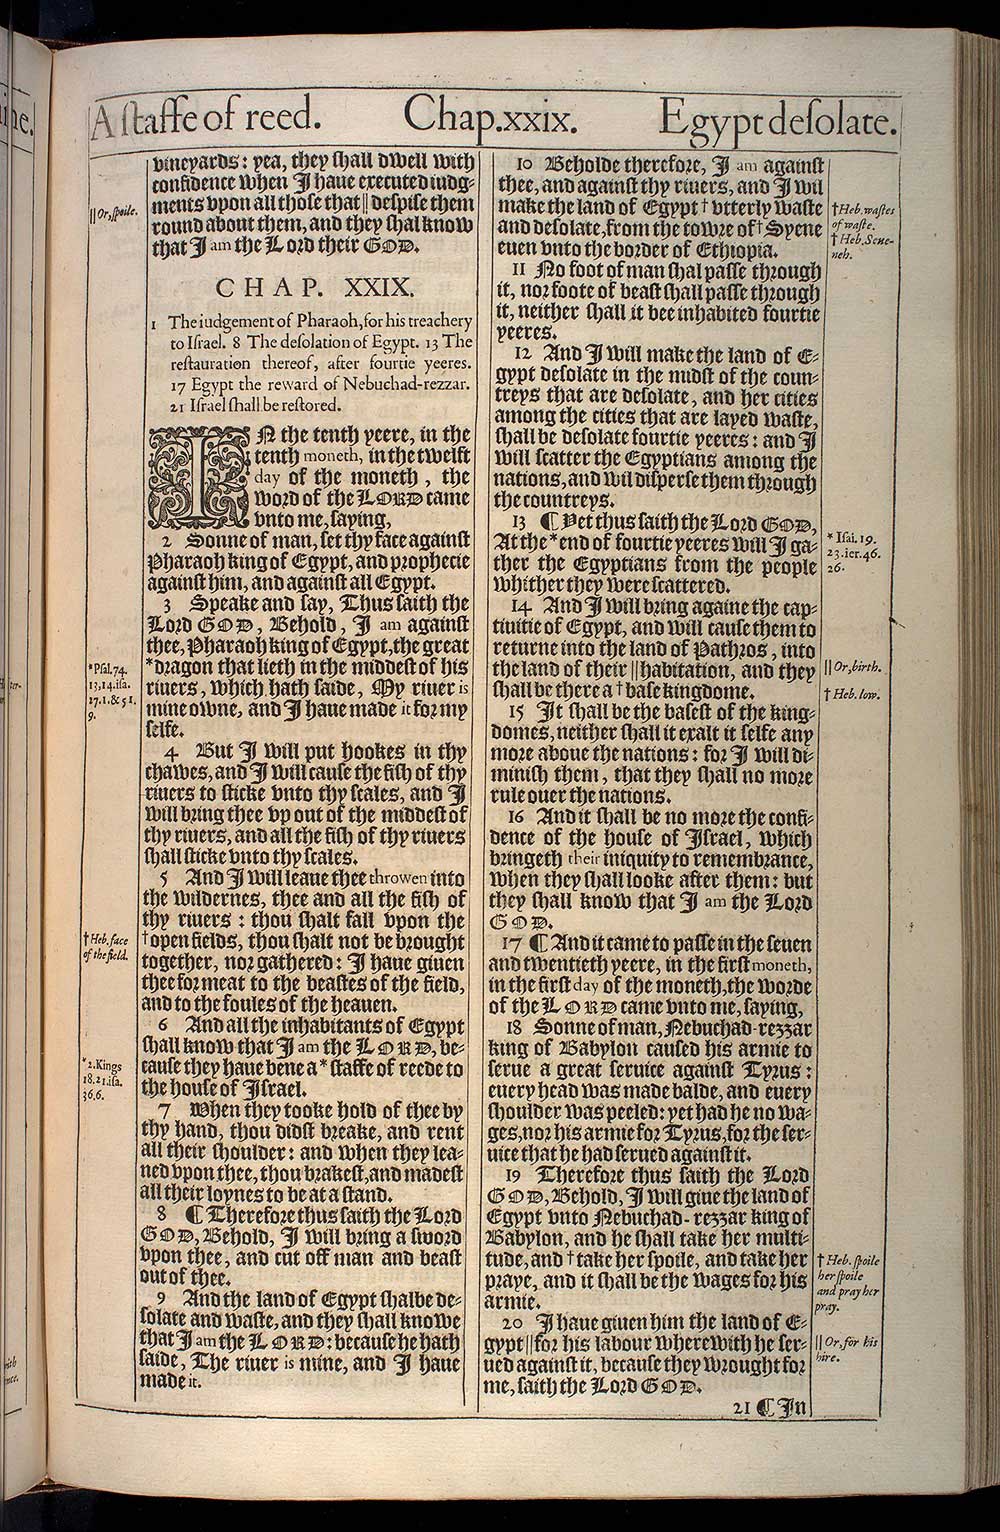 Ezekiel Chapter 29 Original 1611 Bible Scan